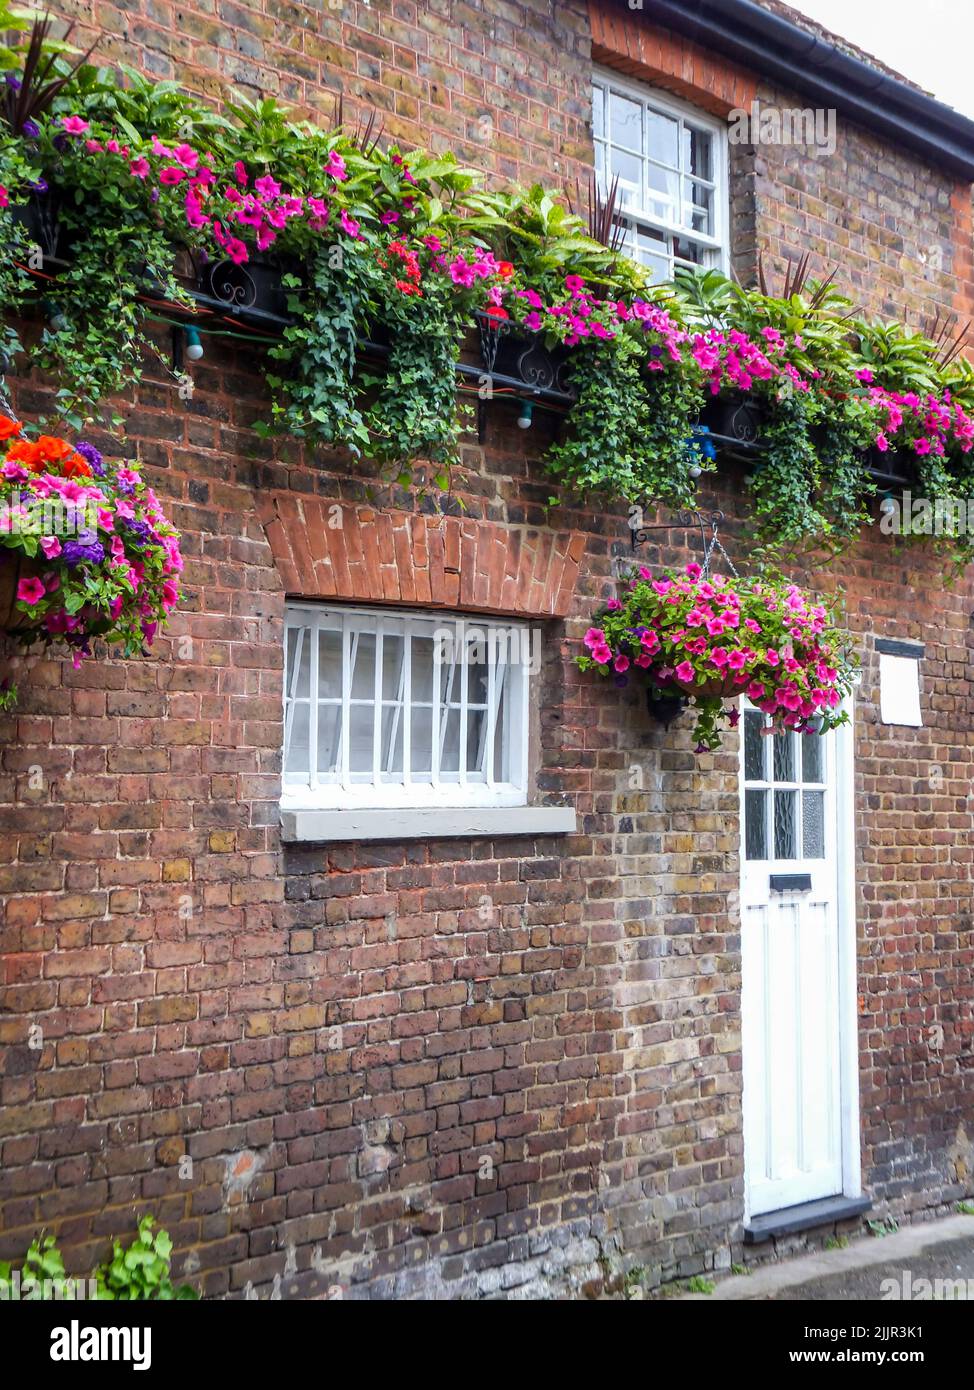 Beautiful hanging petunia flowers adorn the exterior brick wall of Harmondsworth Hall in Harmondsworth, Hillingdon, Middlesex, London, England, UK Stock Photo